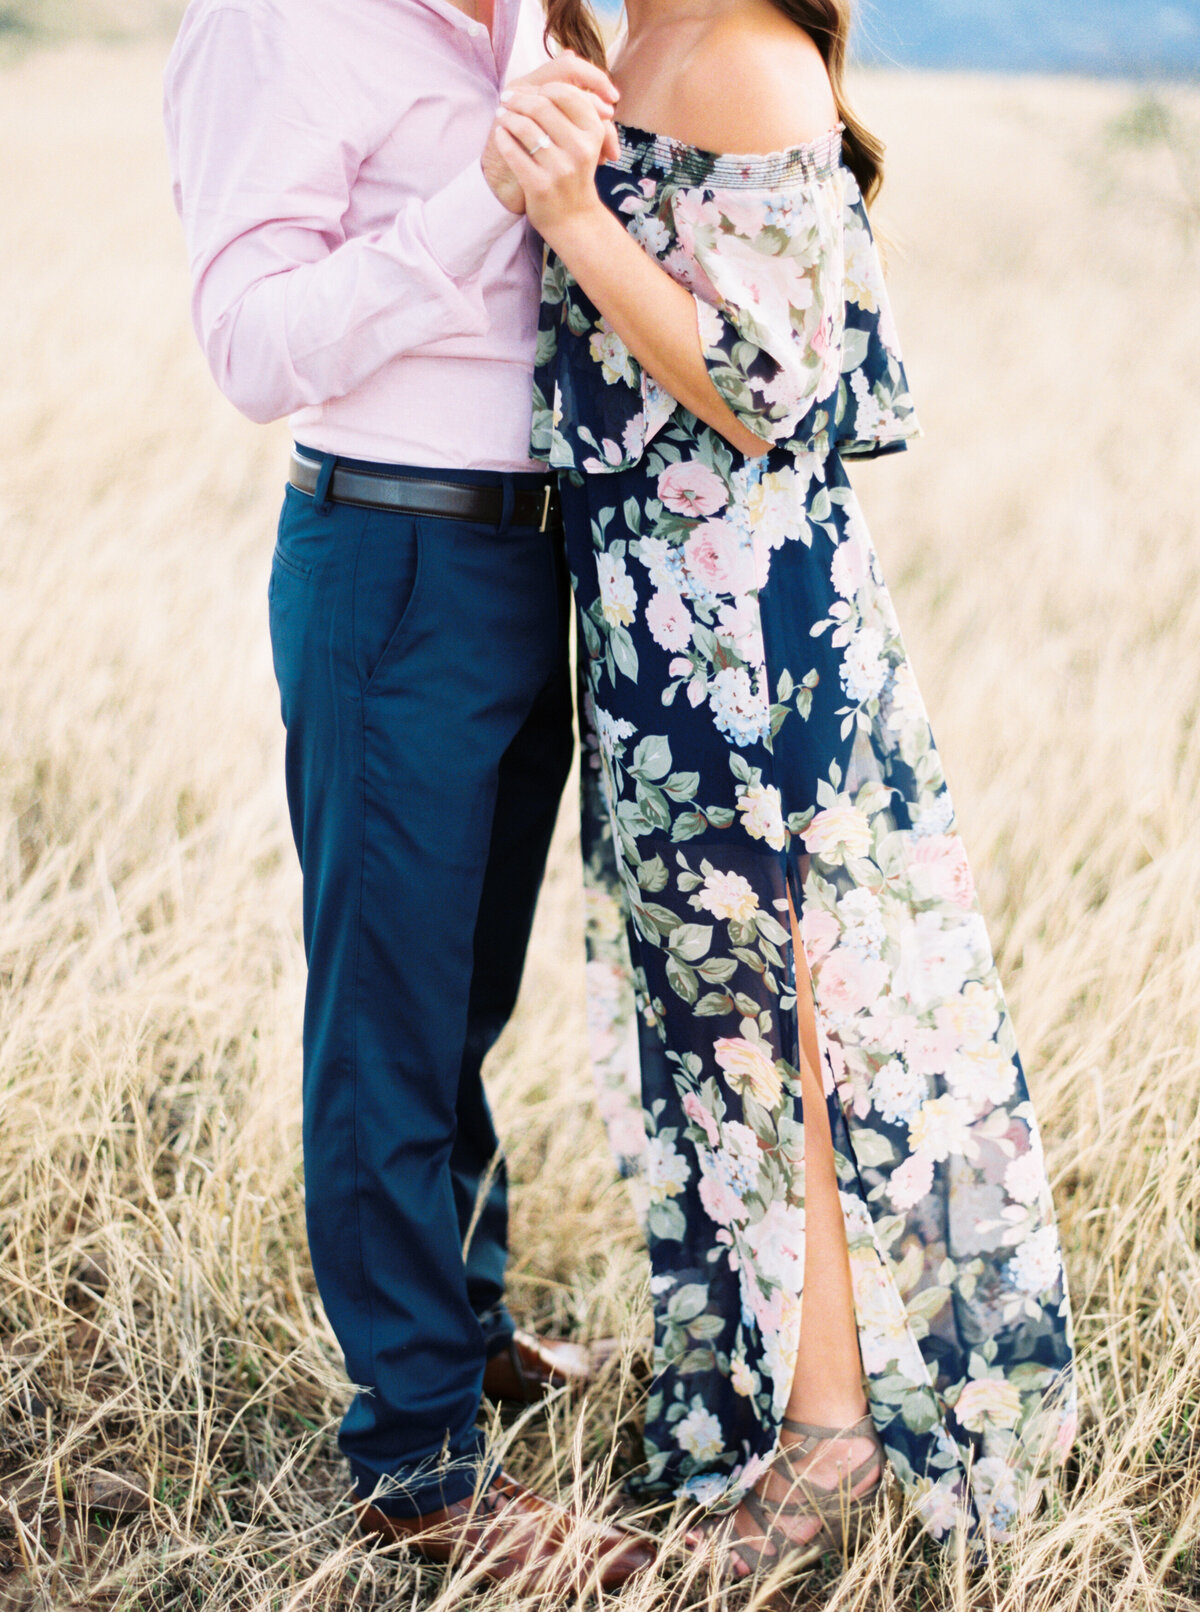 Casey & Matt | Engagement Session | Sunset Point | Mary Claire Photography | Arizona & Destination Fine Art Wedding Photographer